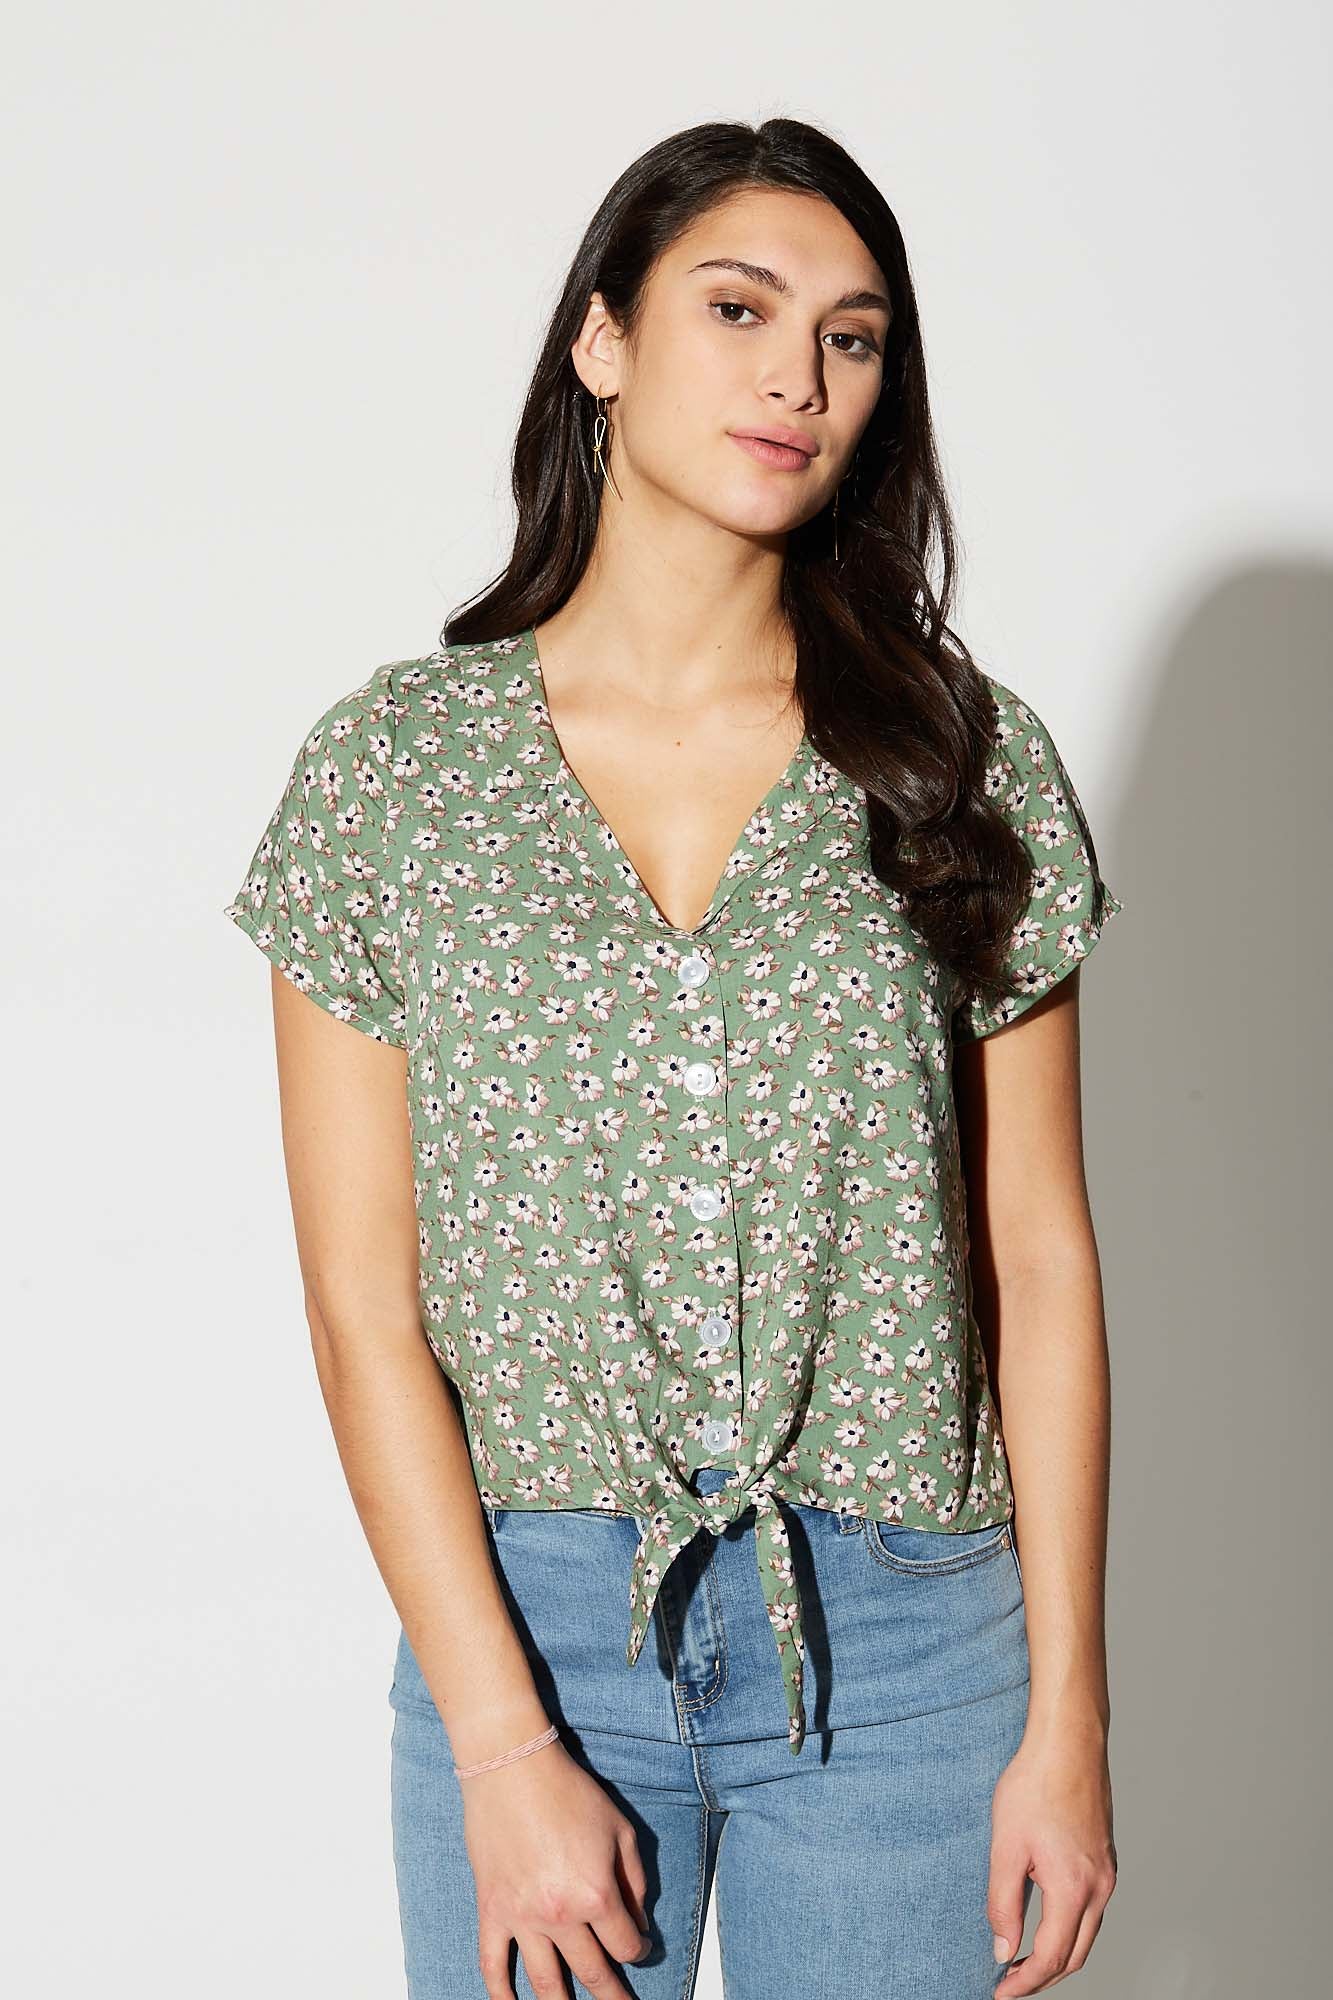 Macarena T-Shirt - Floral Mint 90s